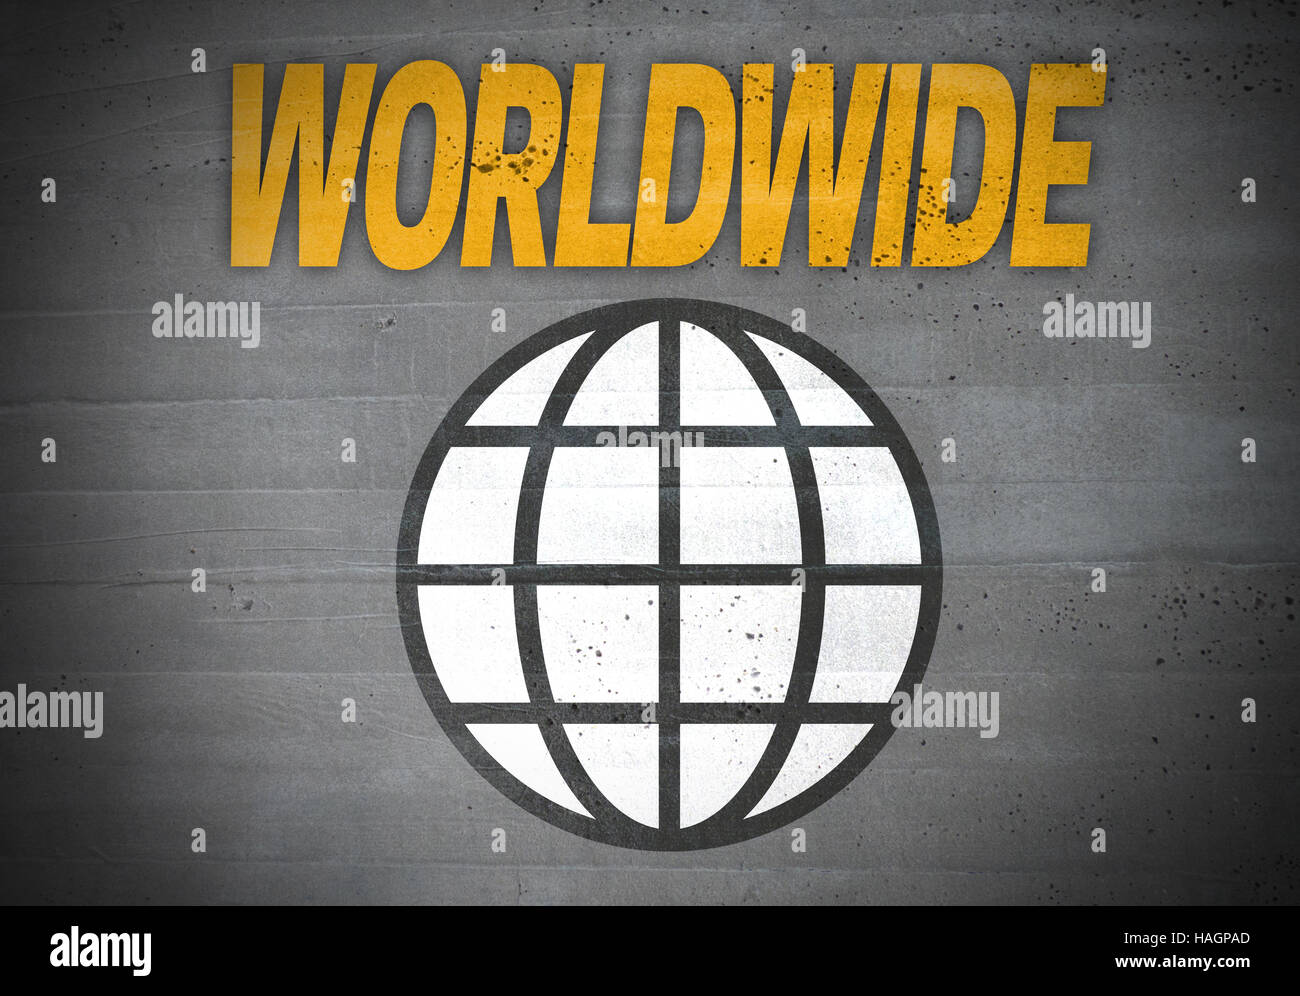 Worldwide globe icon concept background. Stock Photo